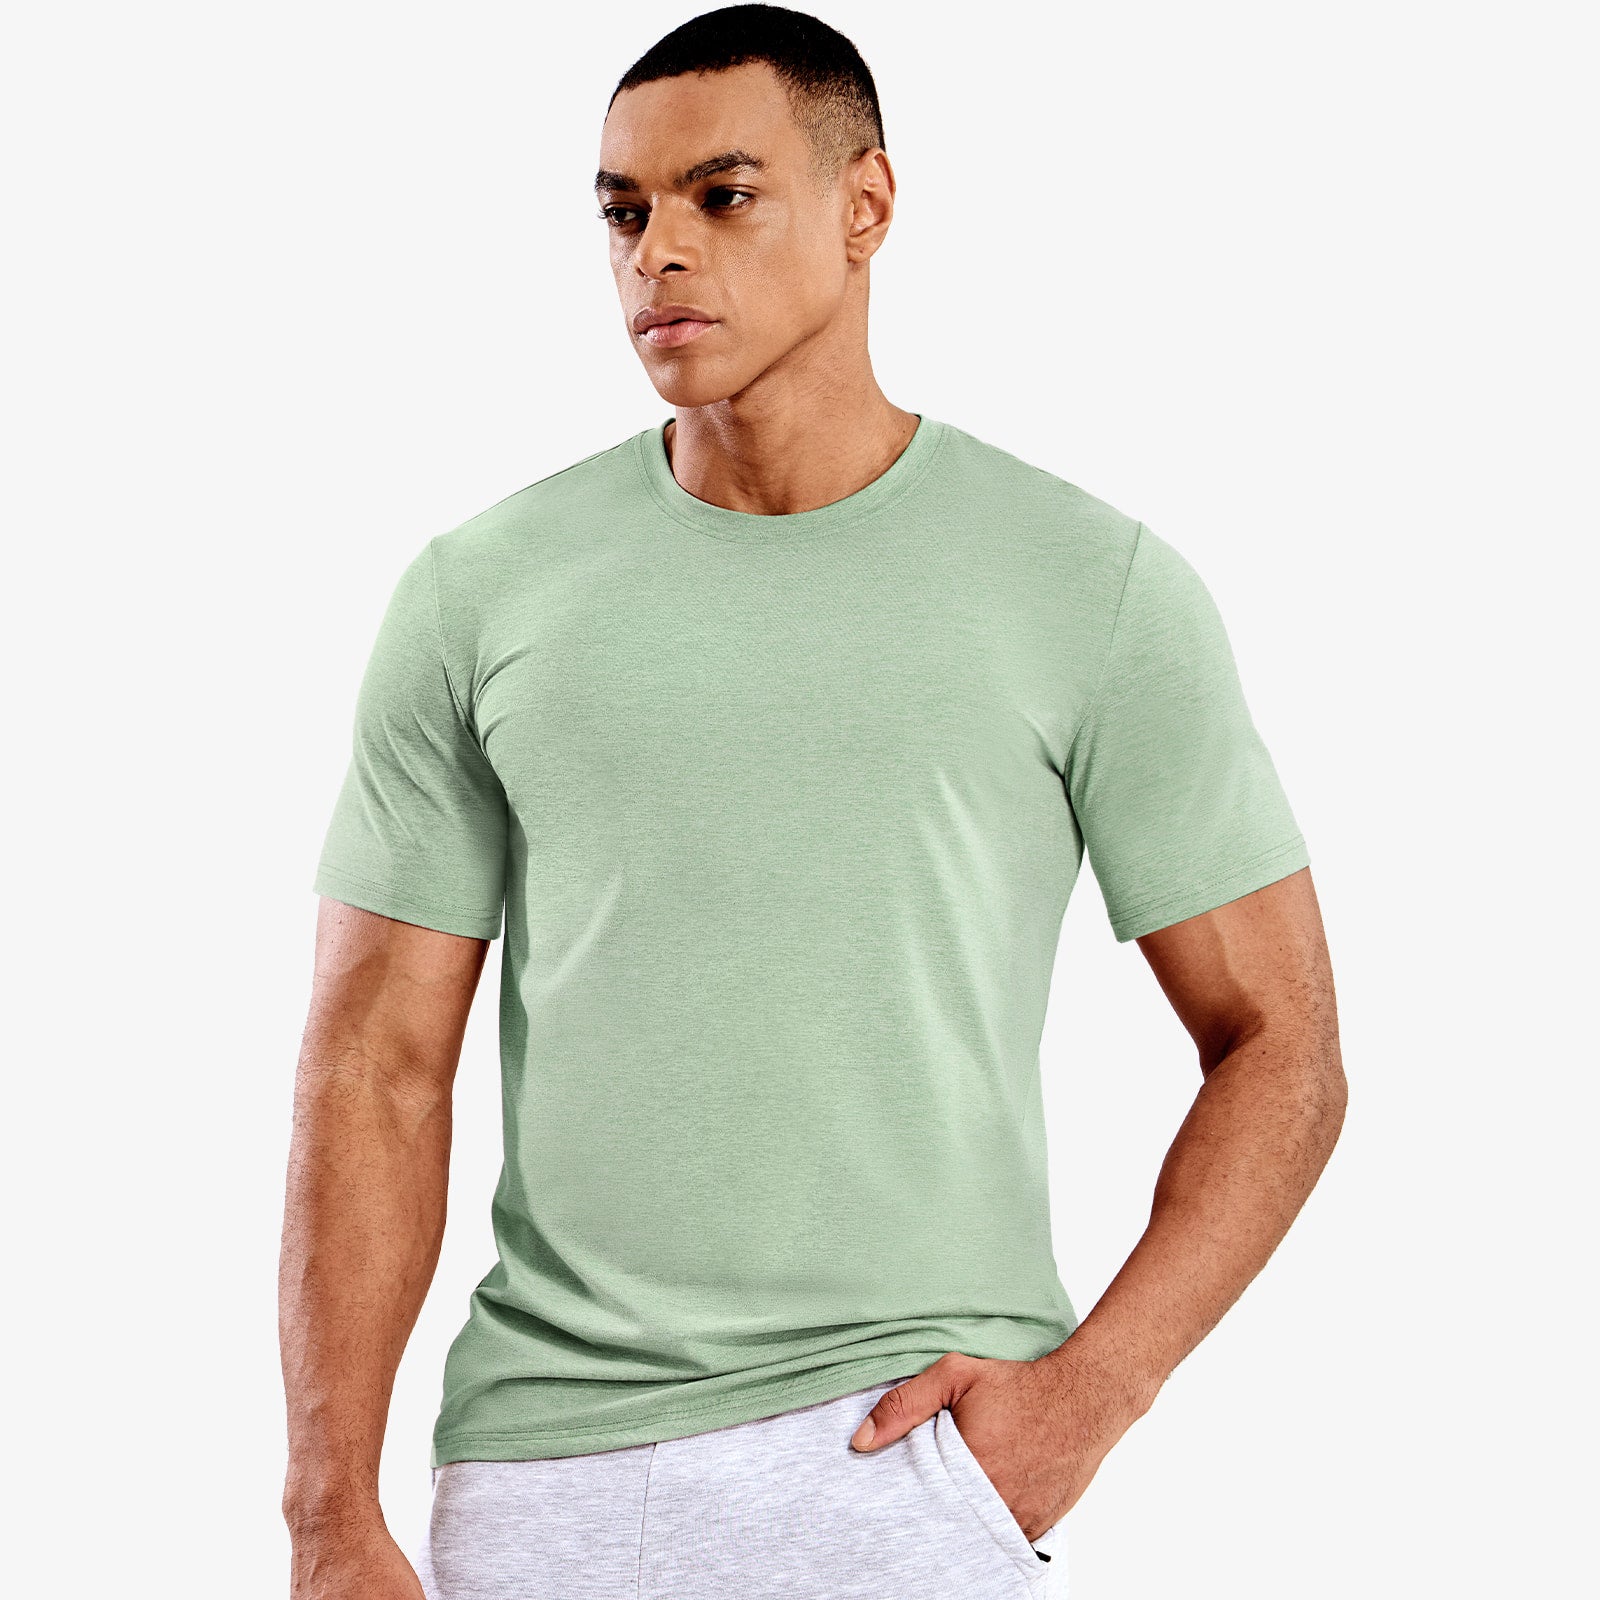 Men's T Shirts Short Sleeve Dry Fit Soft Athletic Tshirt